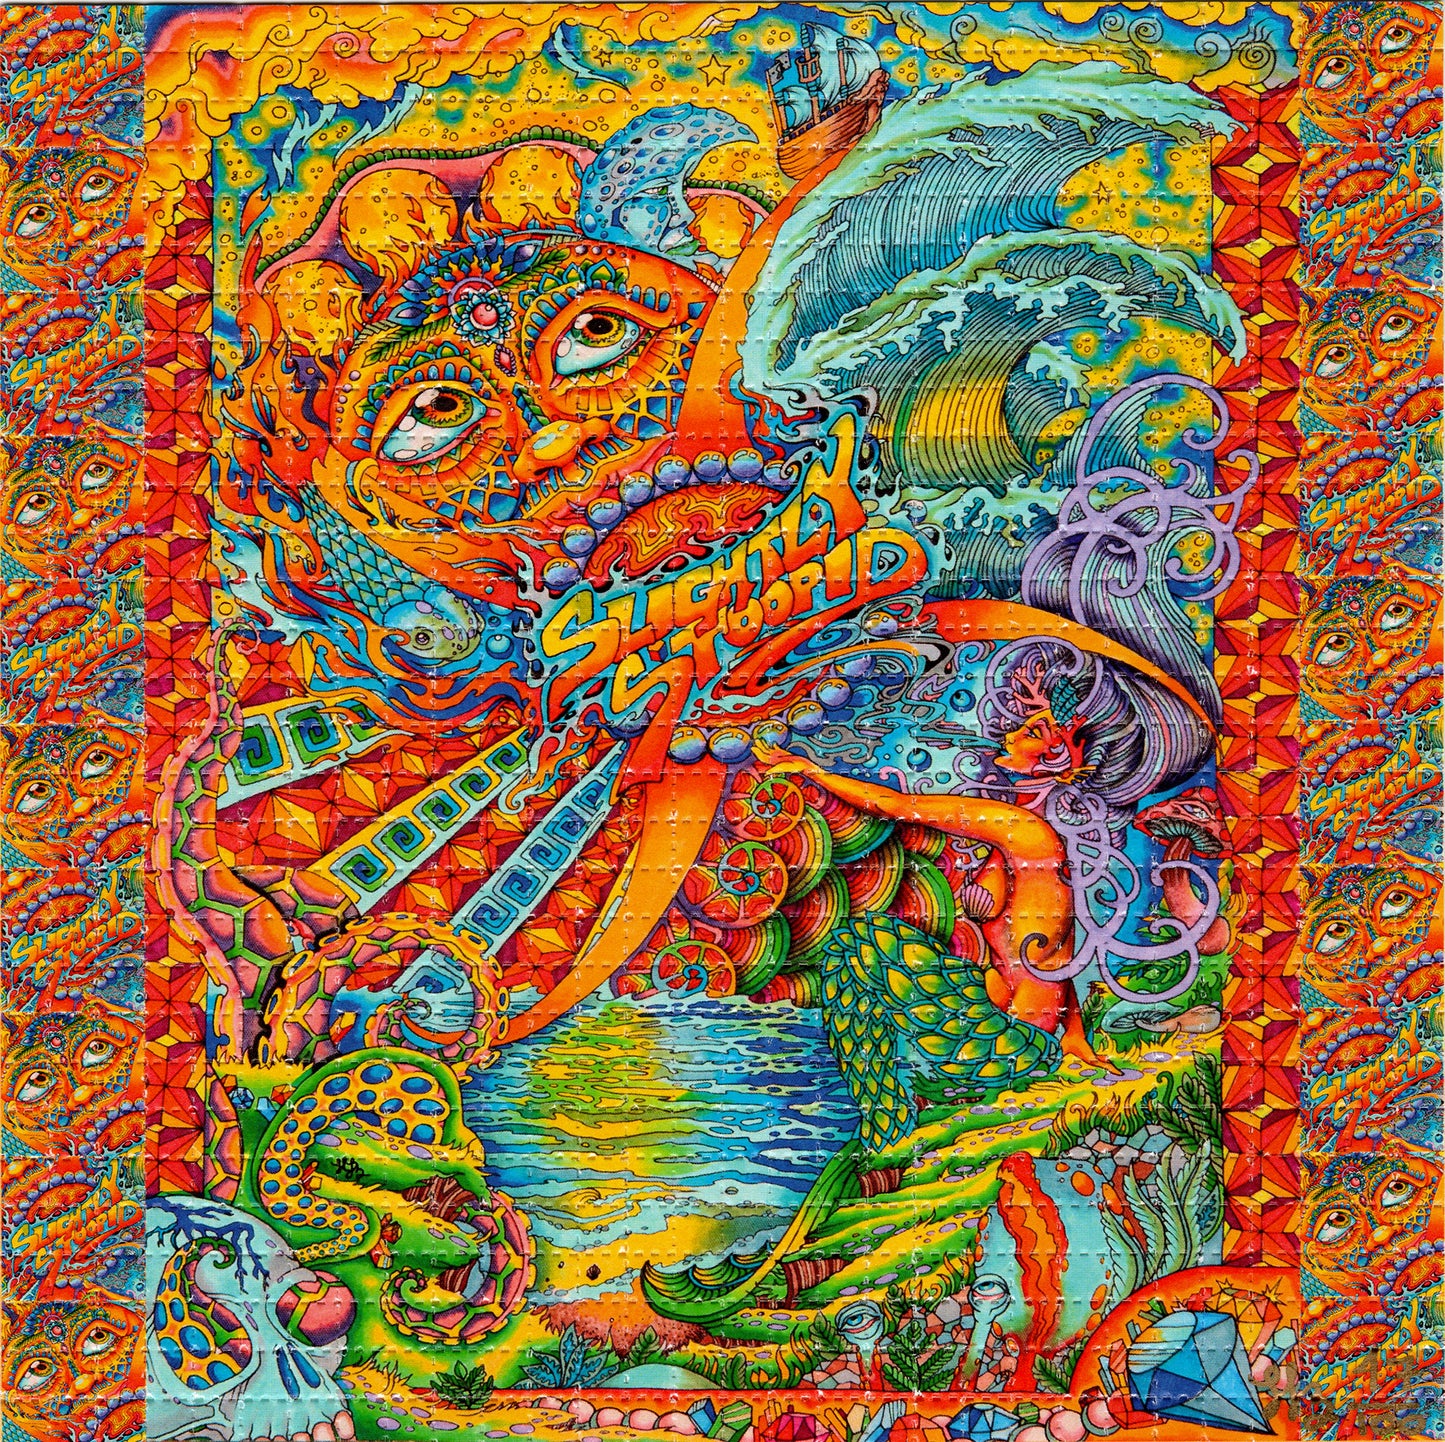 Slightly Stoopid Tribute by Hannah Elisabeth Buchheit Signed Limited Edition LSD blotter art print